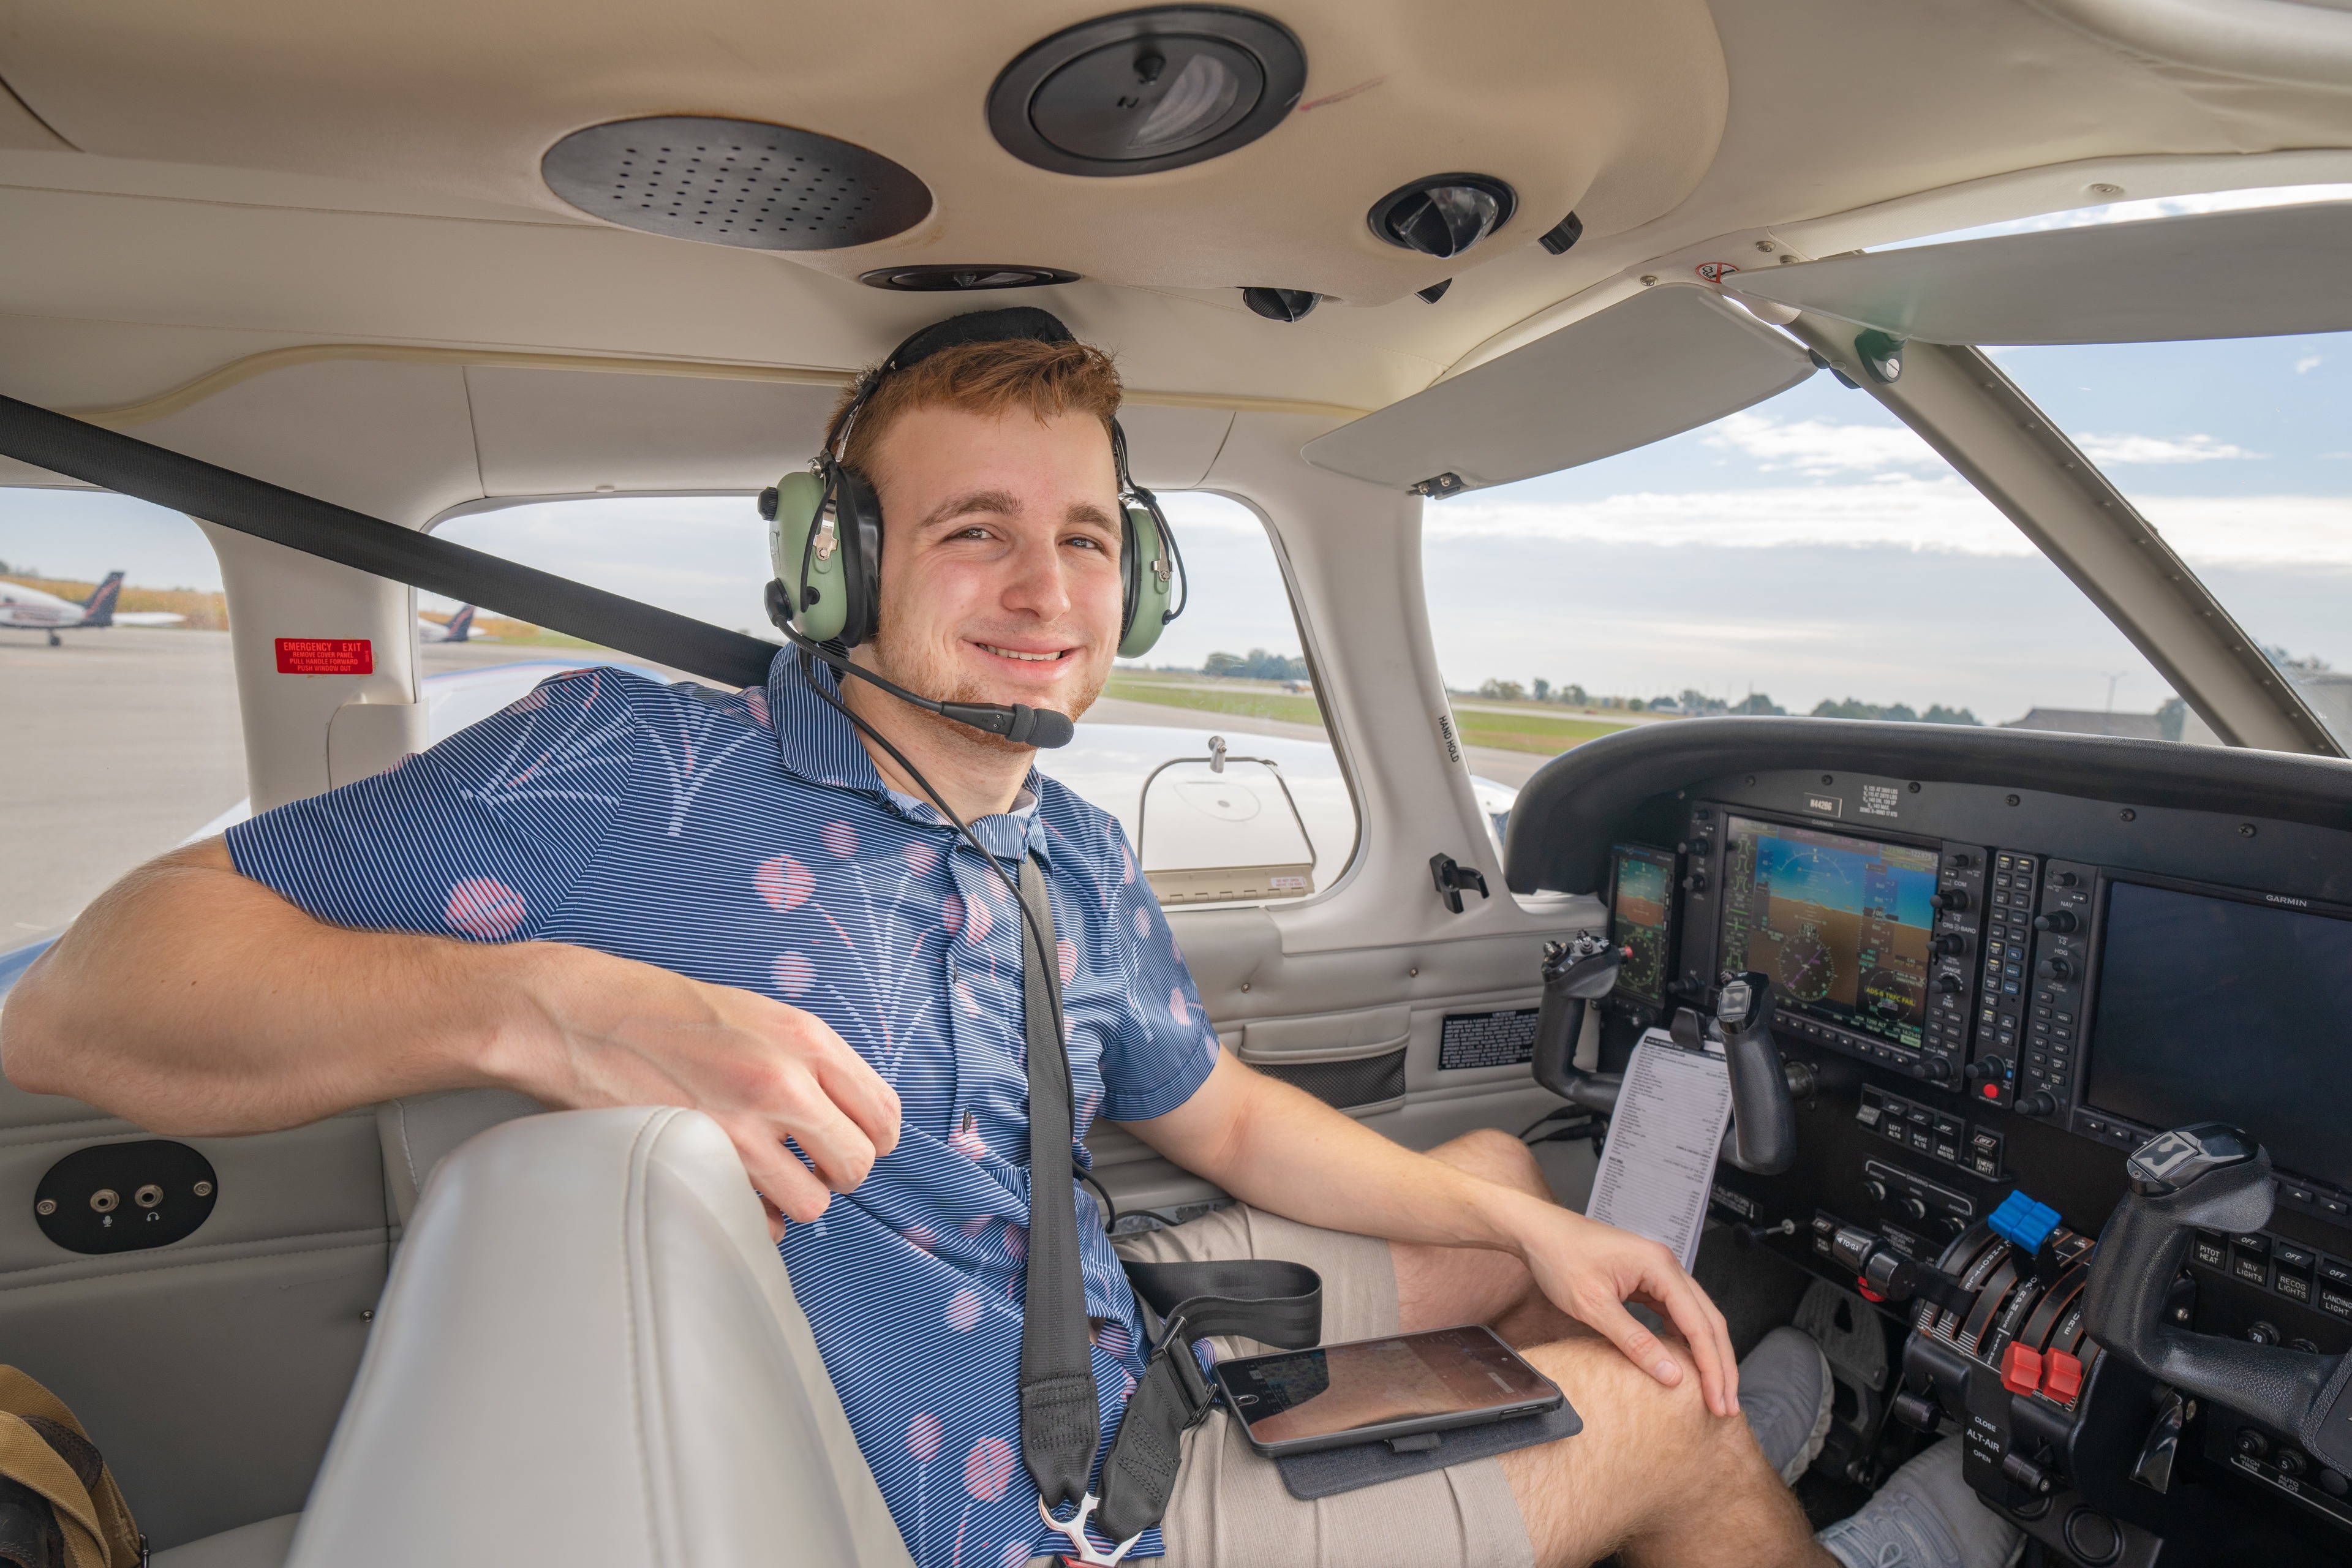 BGSU student Mason Manns sits at the controls of an airplane